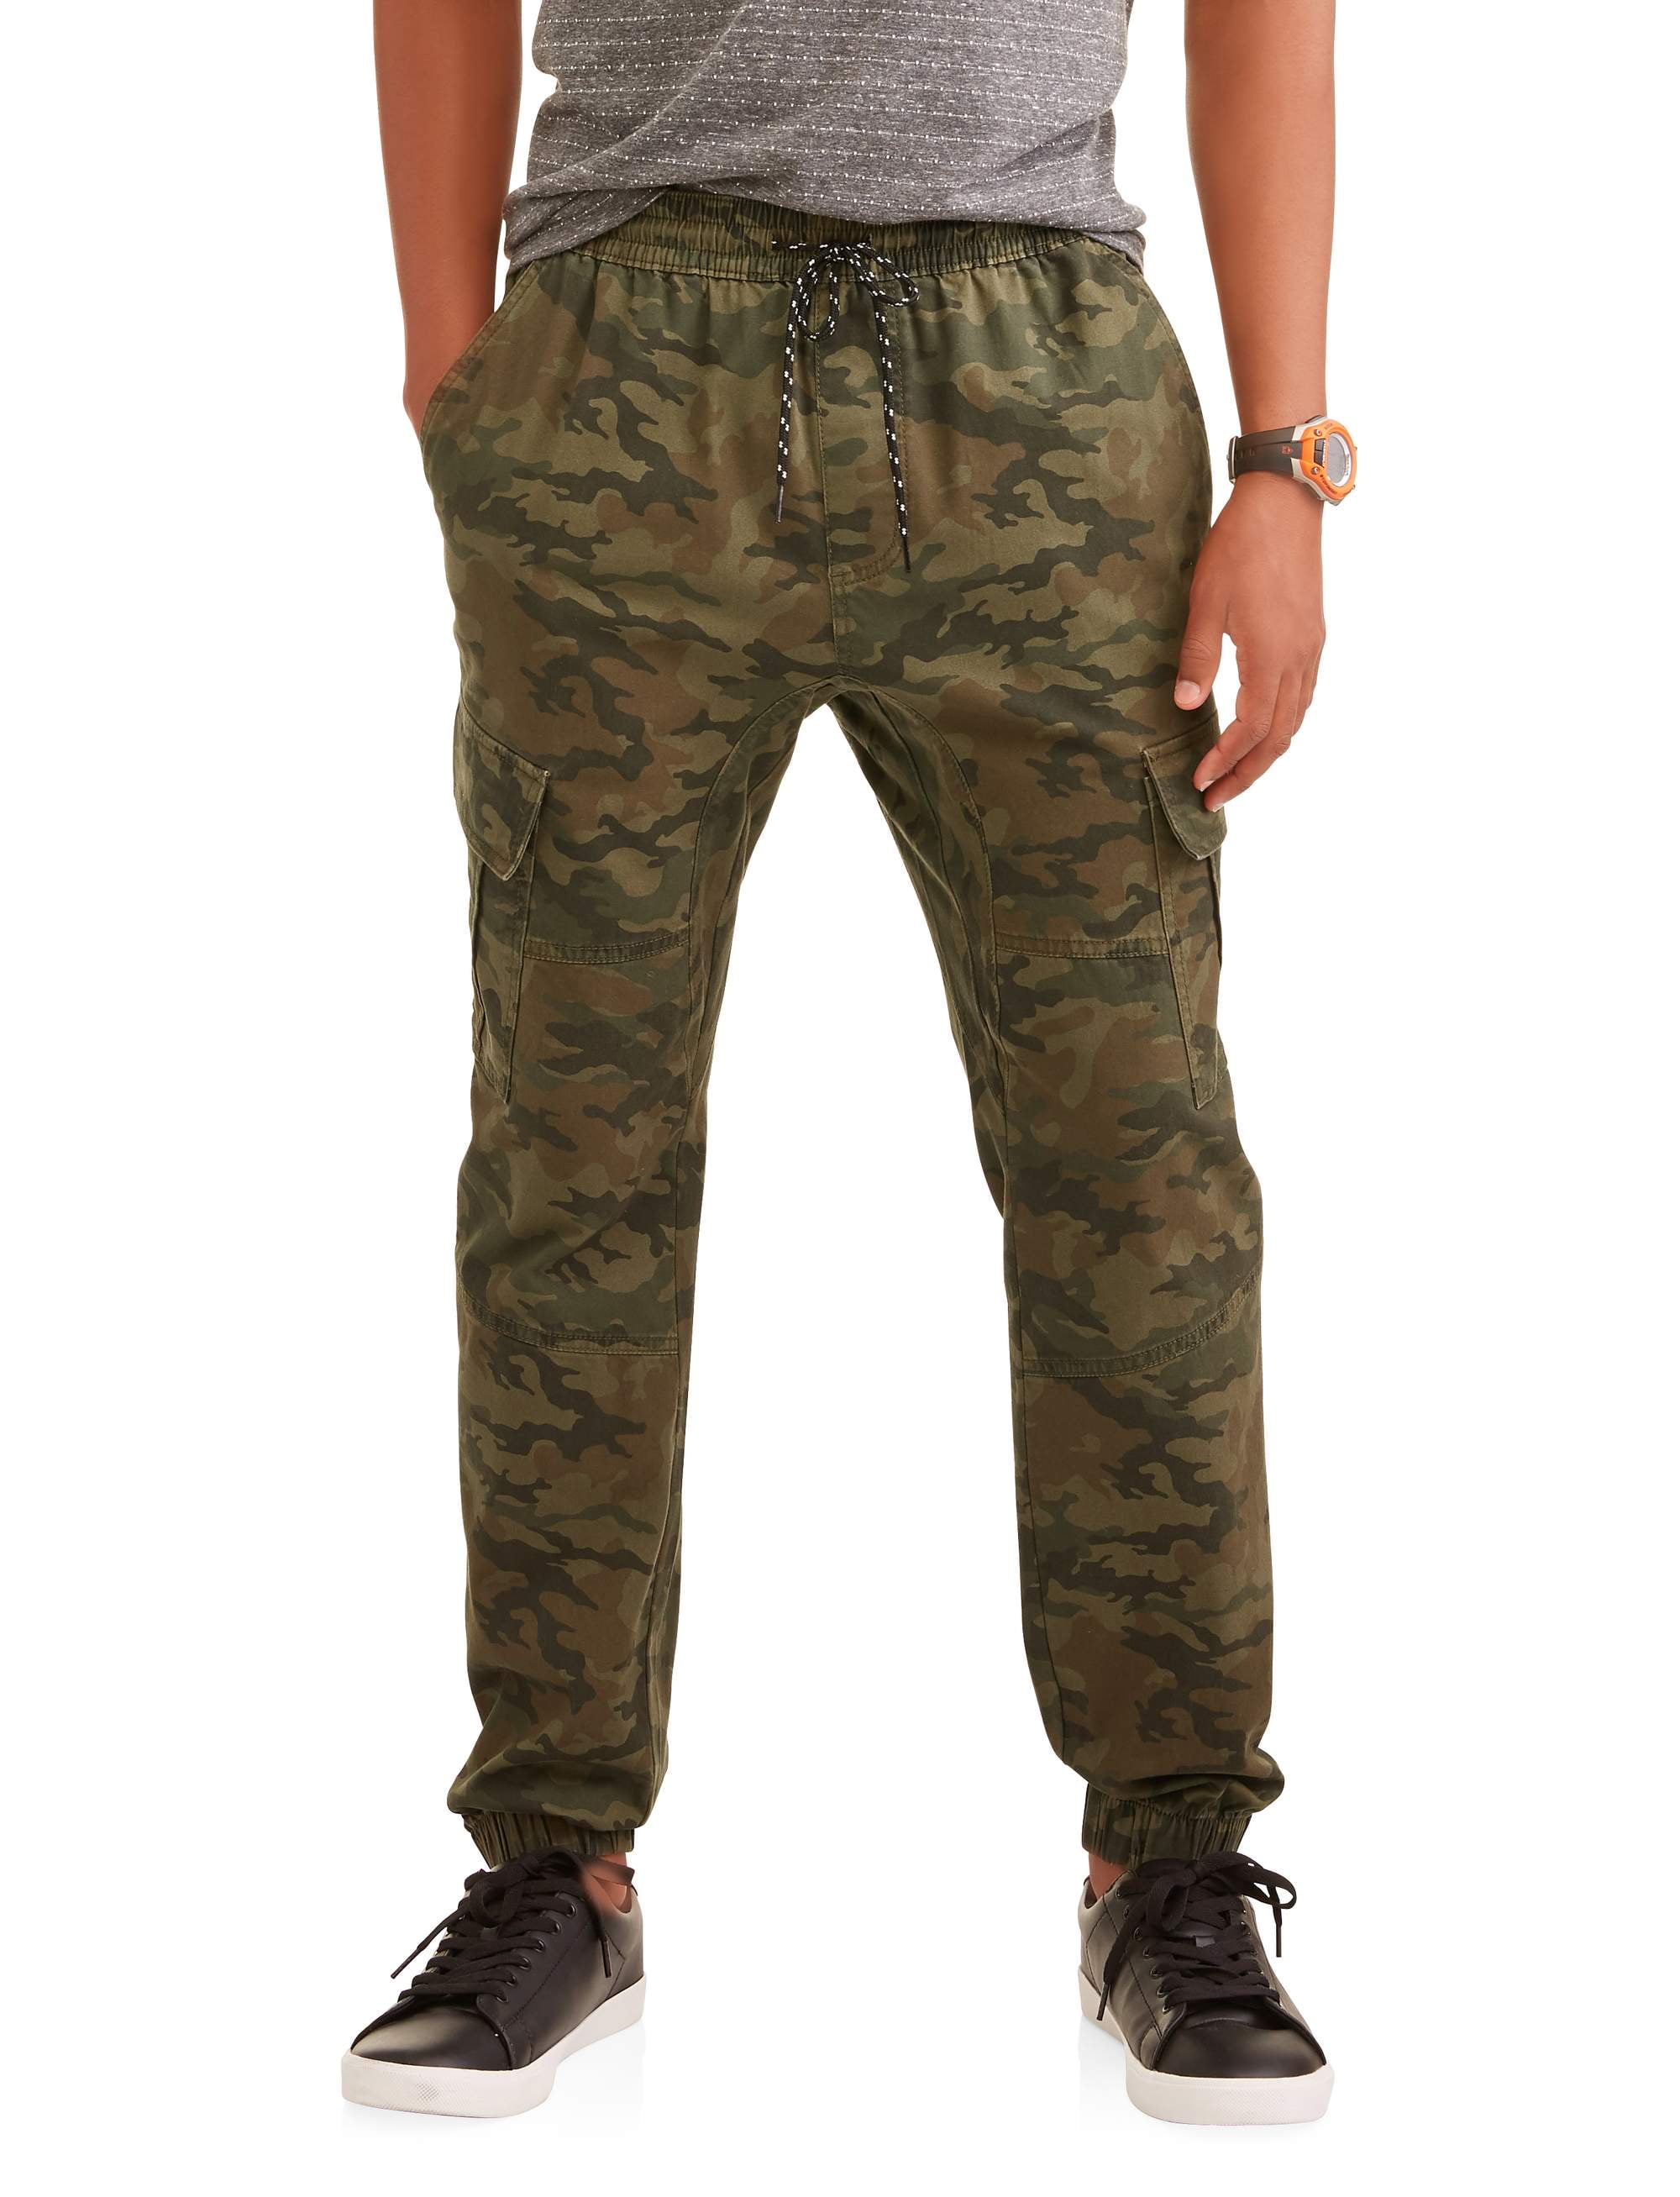 ZXFHZS Mens Multi-Pockets Jogger Outdoor Elastic Waistband Military Camo Pants